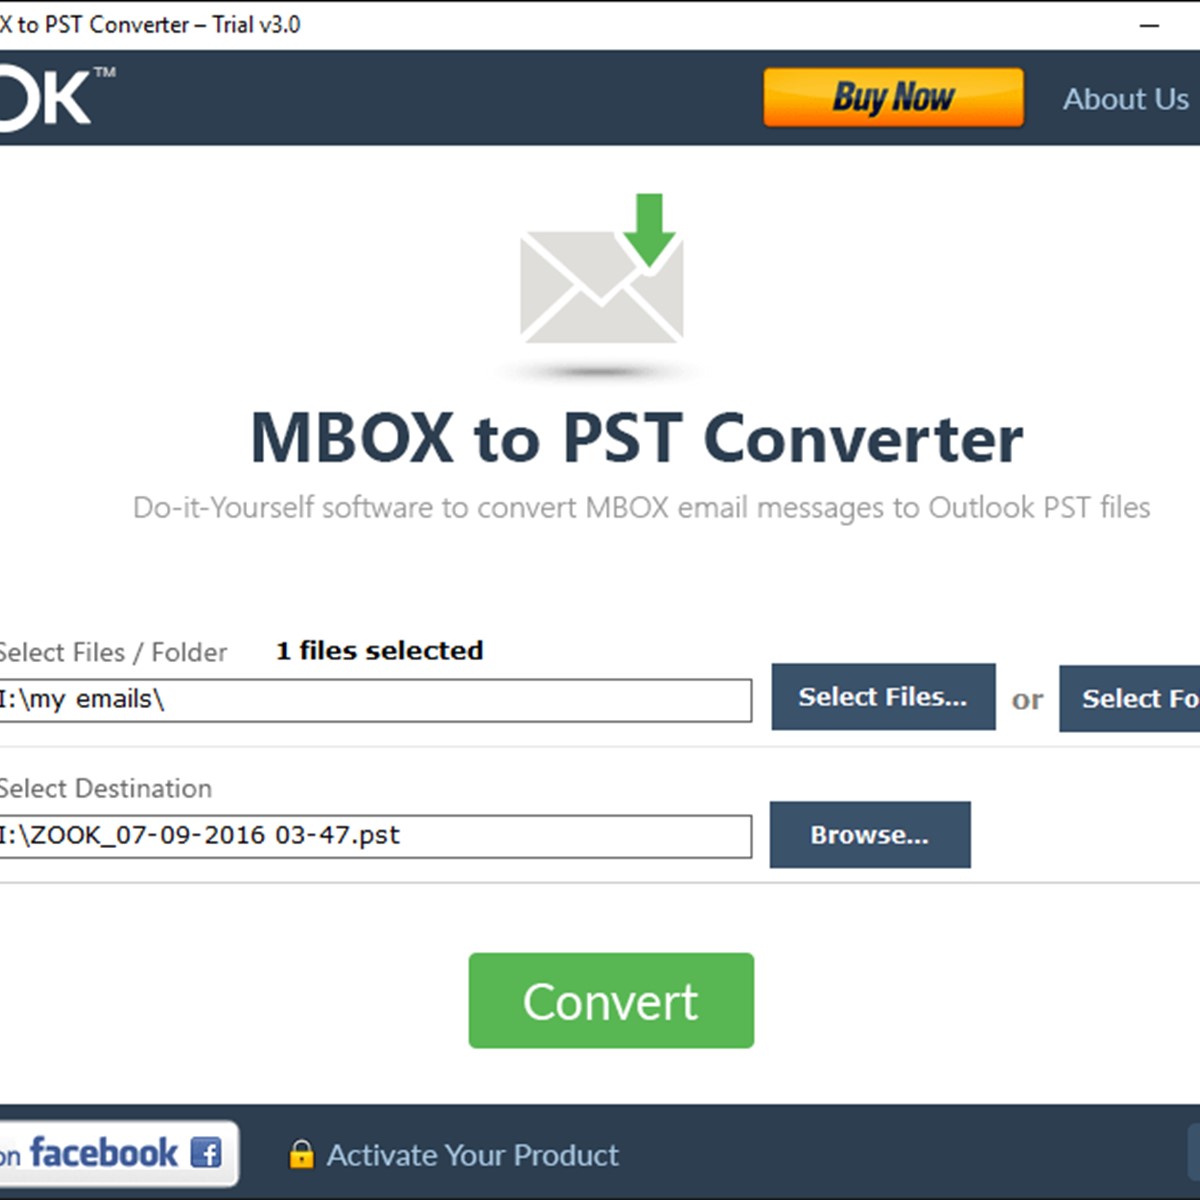 stellar mbox to pst converter 2.2 serial